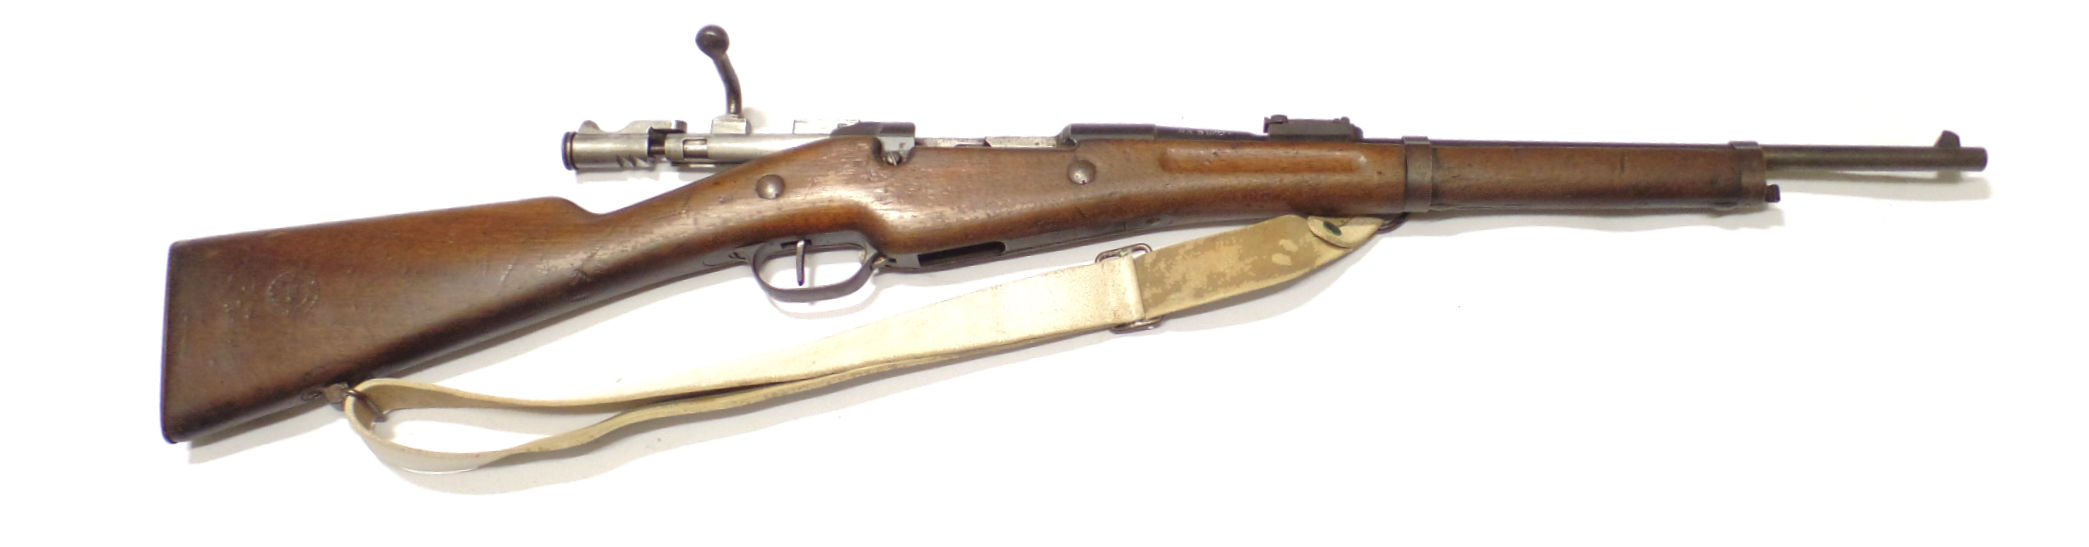 Mousqueton Modèle 1890 calibre 8mmLEBEL